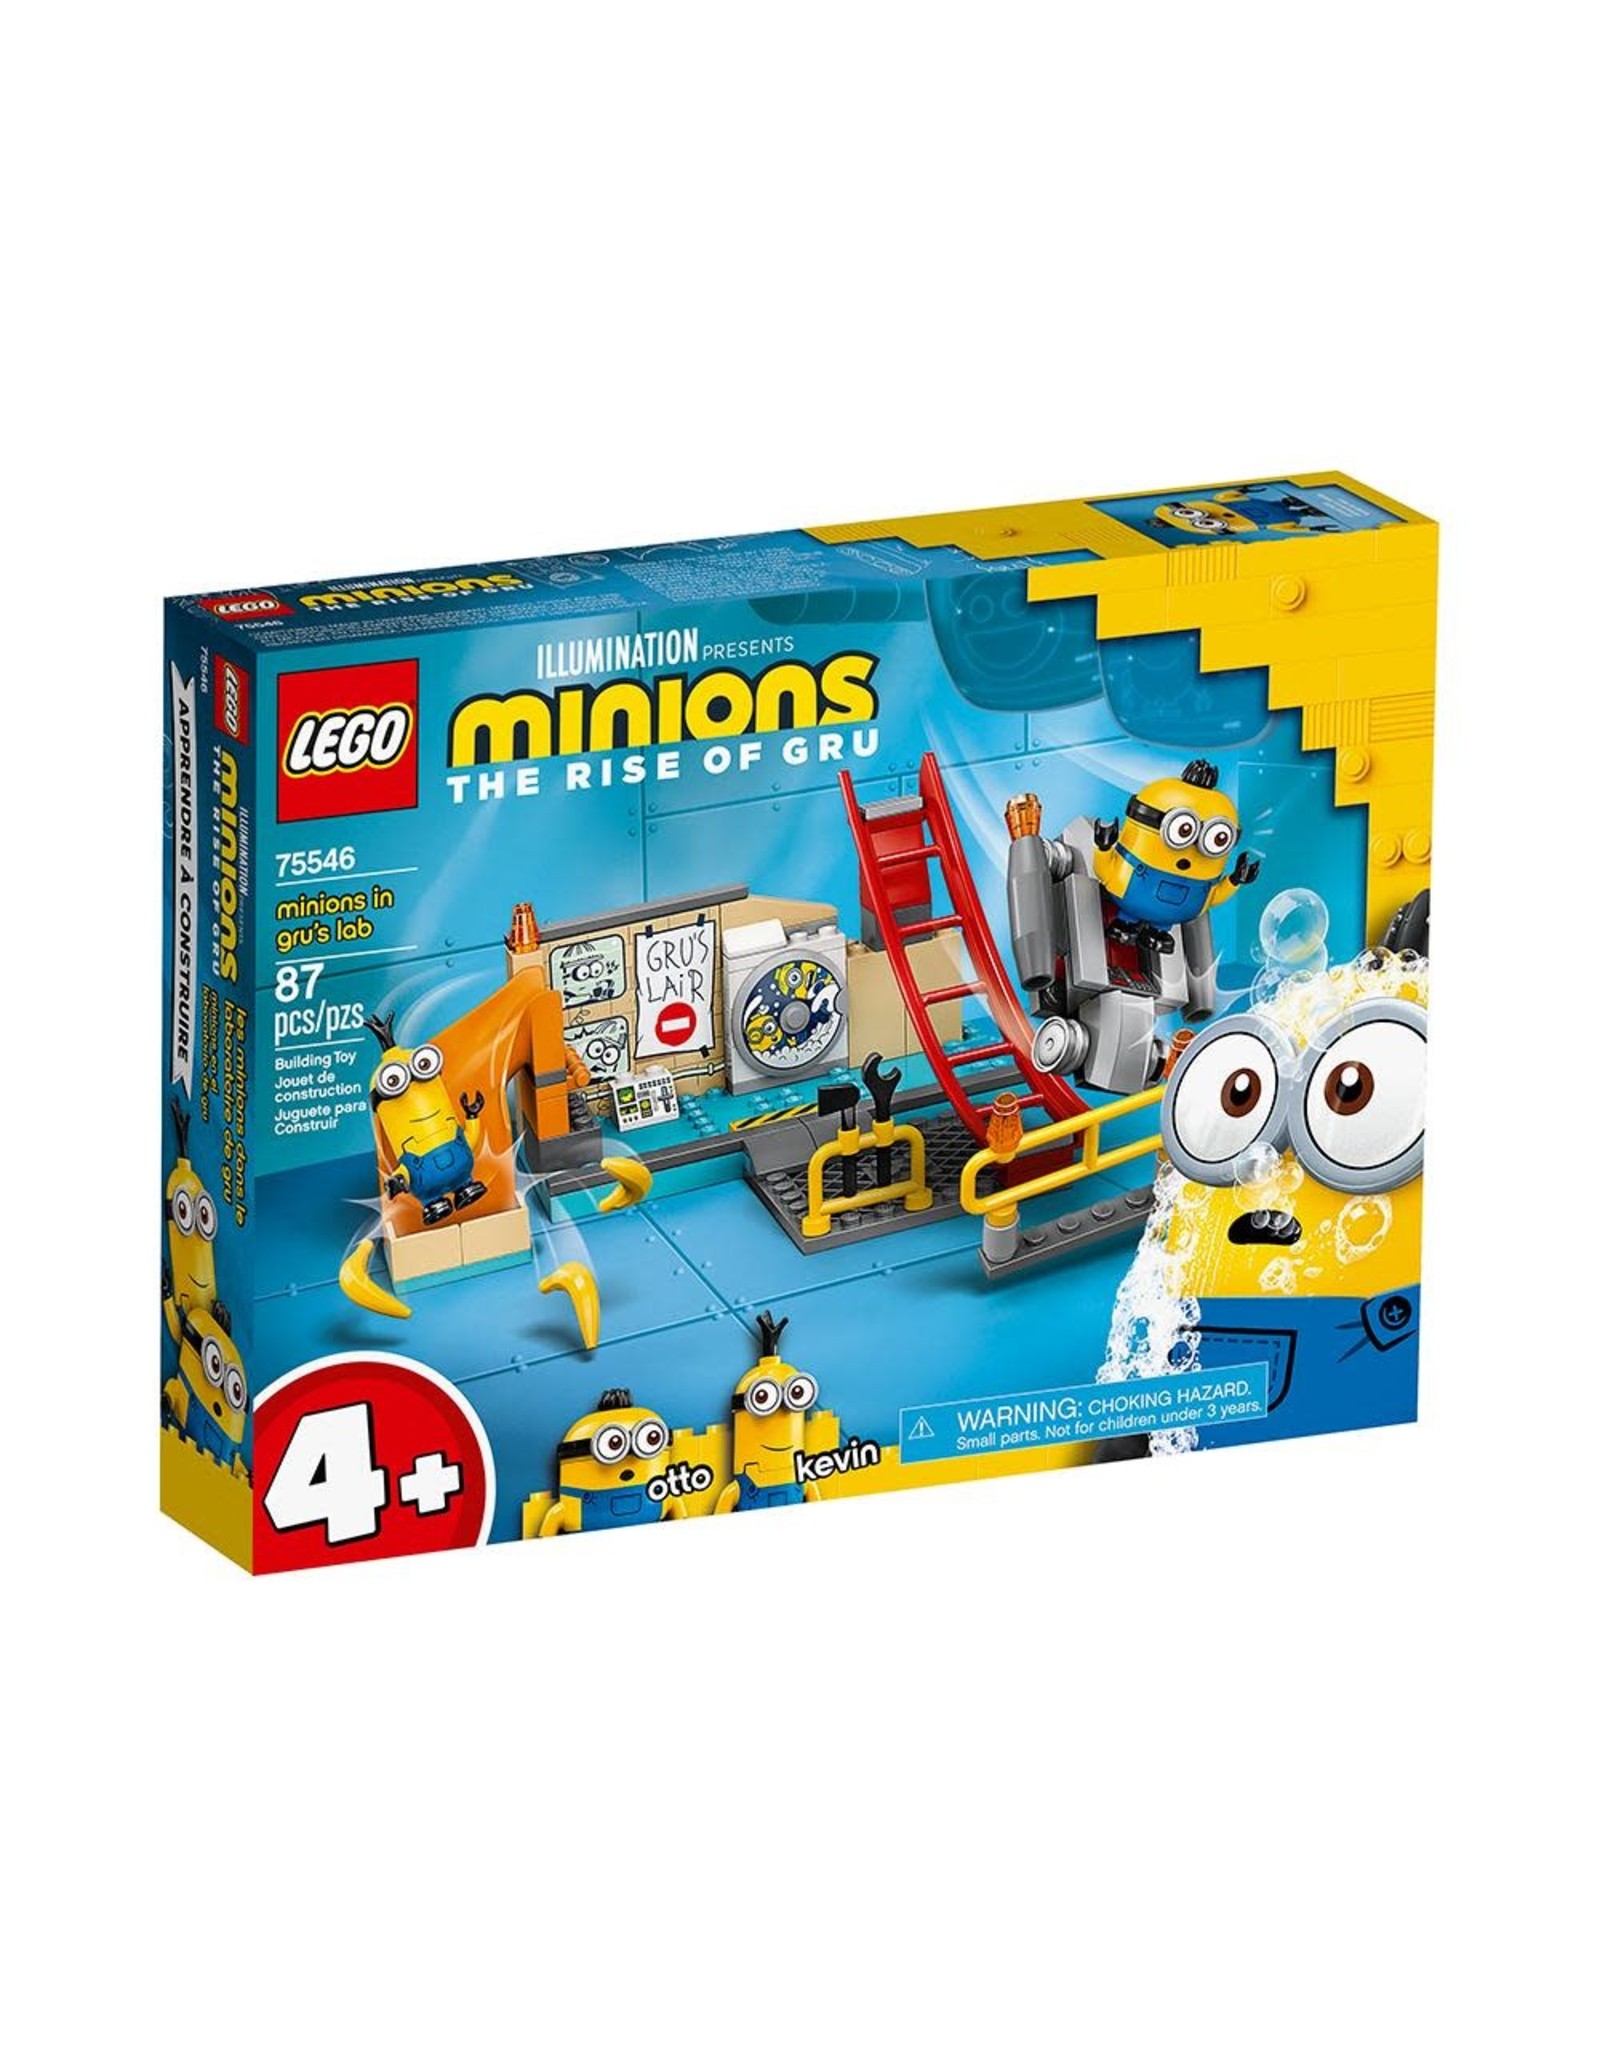 LEGO Minions - 75546 - Minions in Gru's Lab